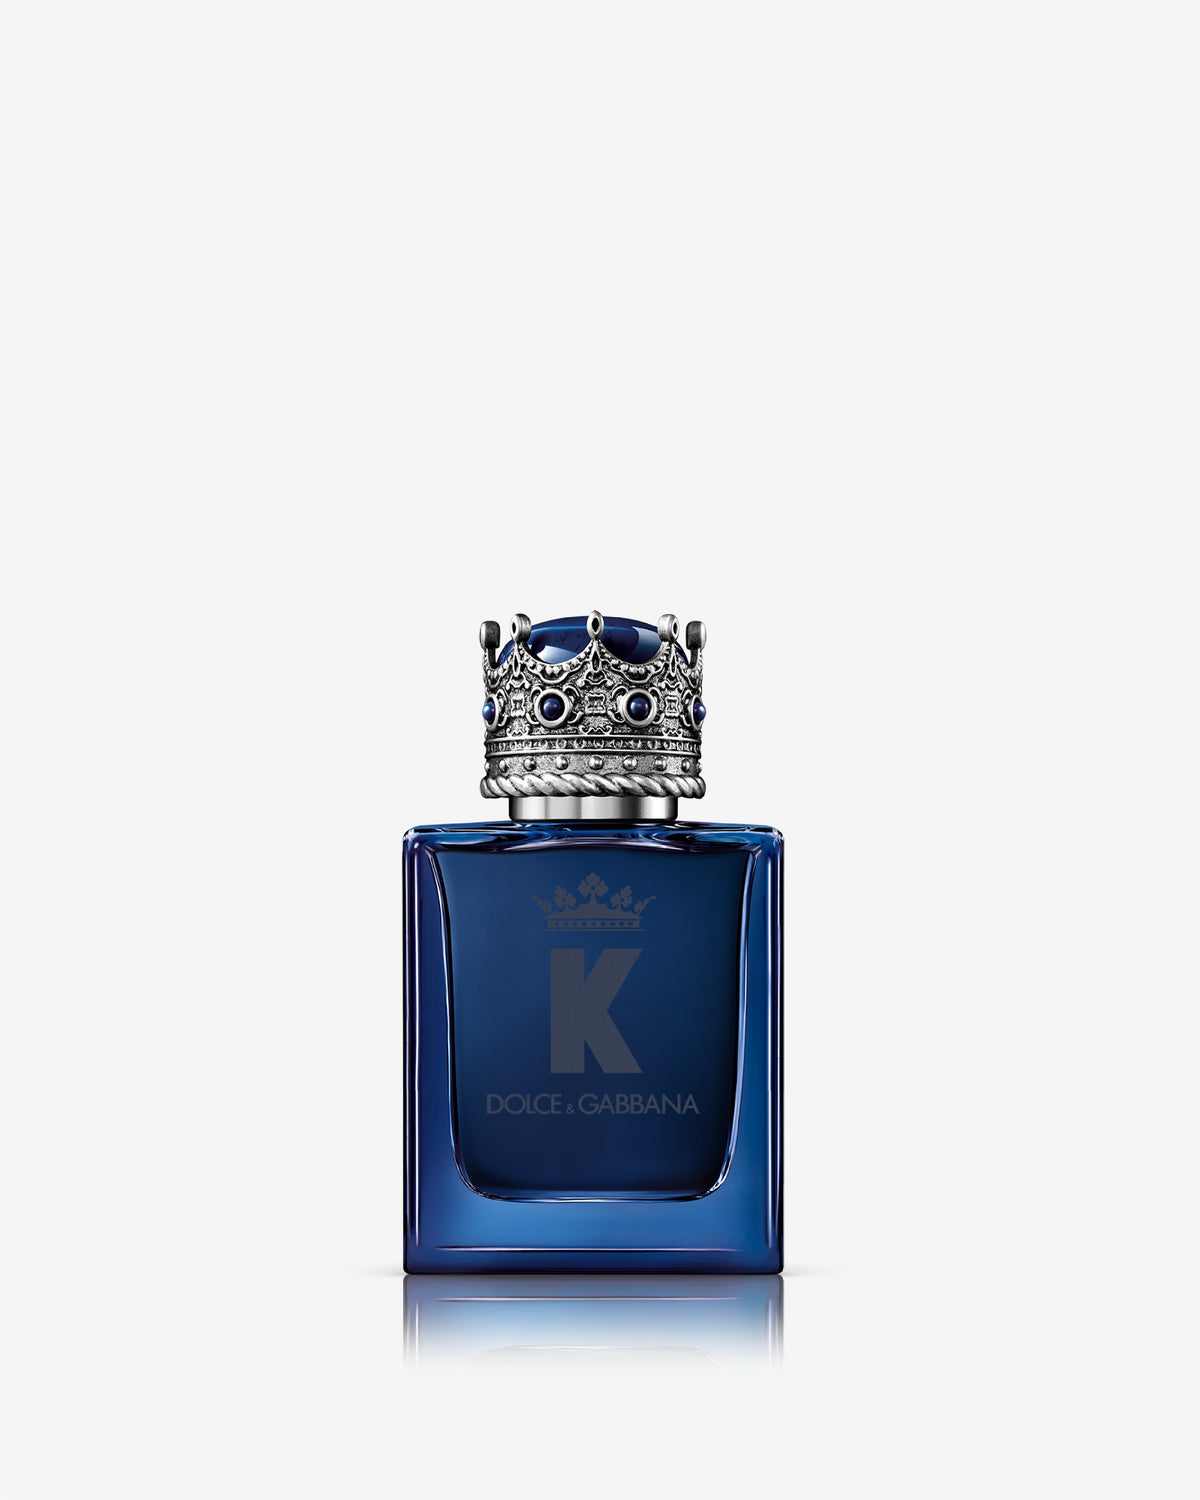 K By Dolce &amp; Gabbana Eau De Parfum Intense